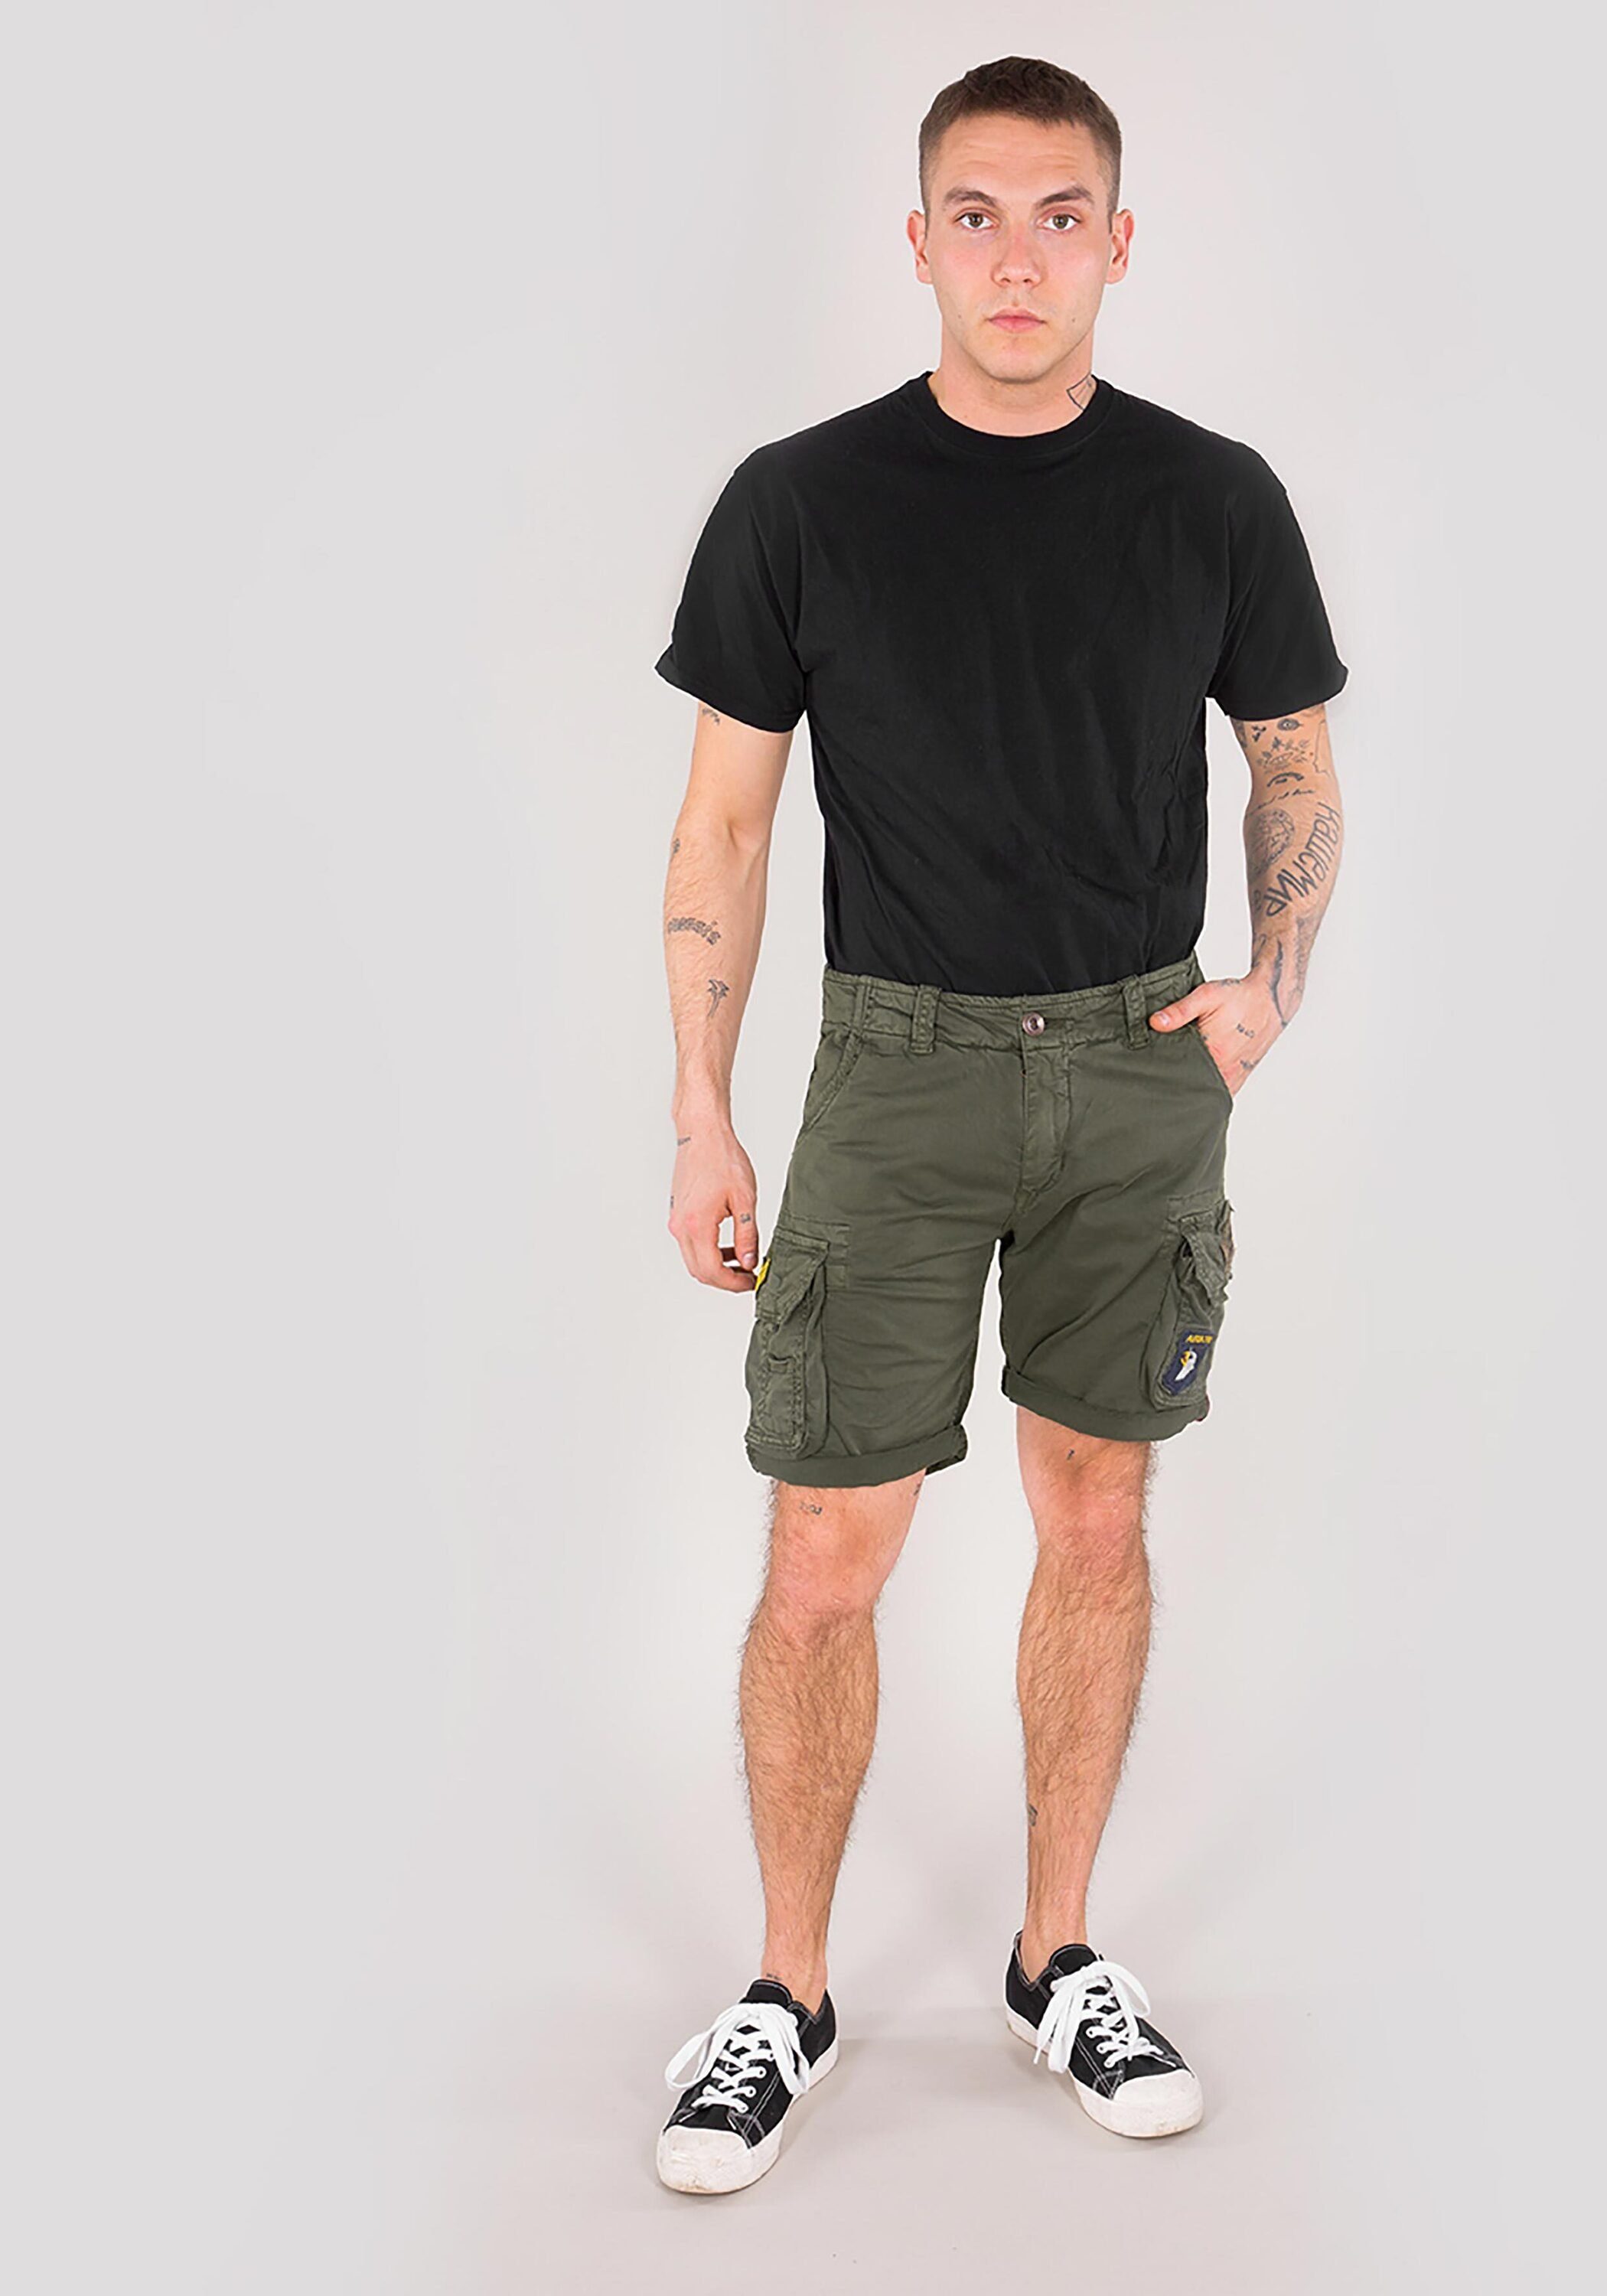 olive Shorts Crew Alpha Men dark - Short Alpha Patch Shorts Industries Industries